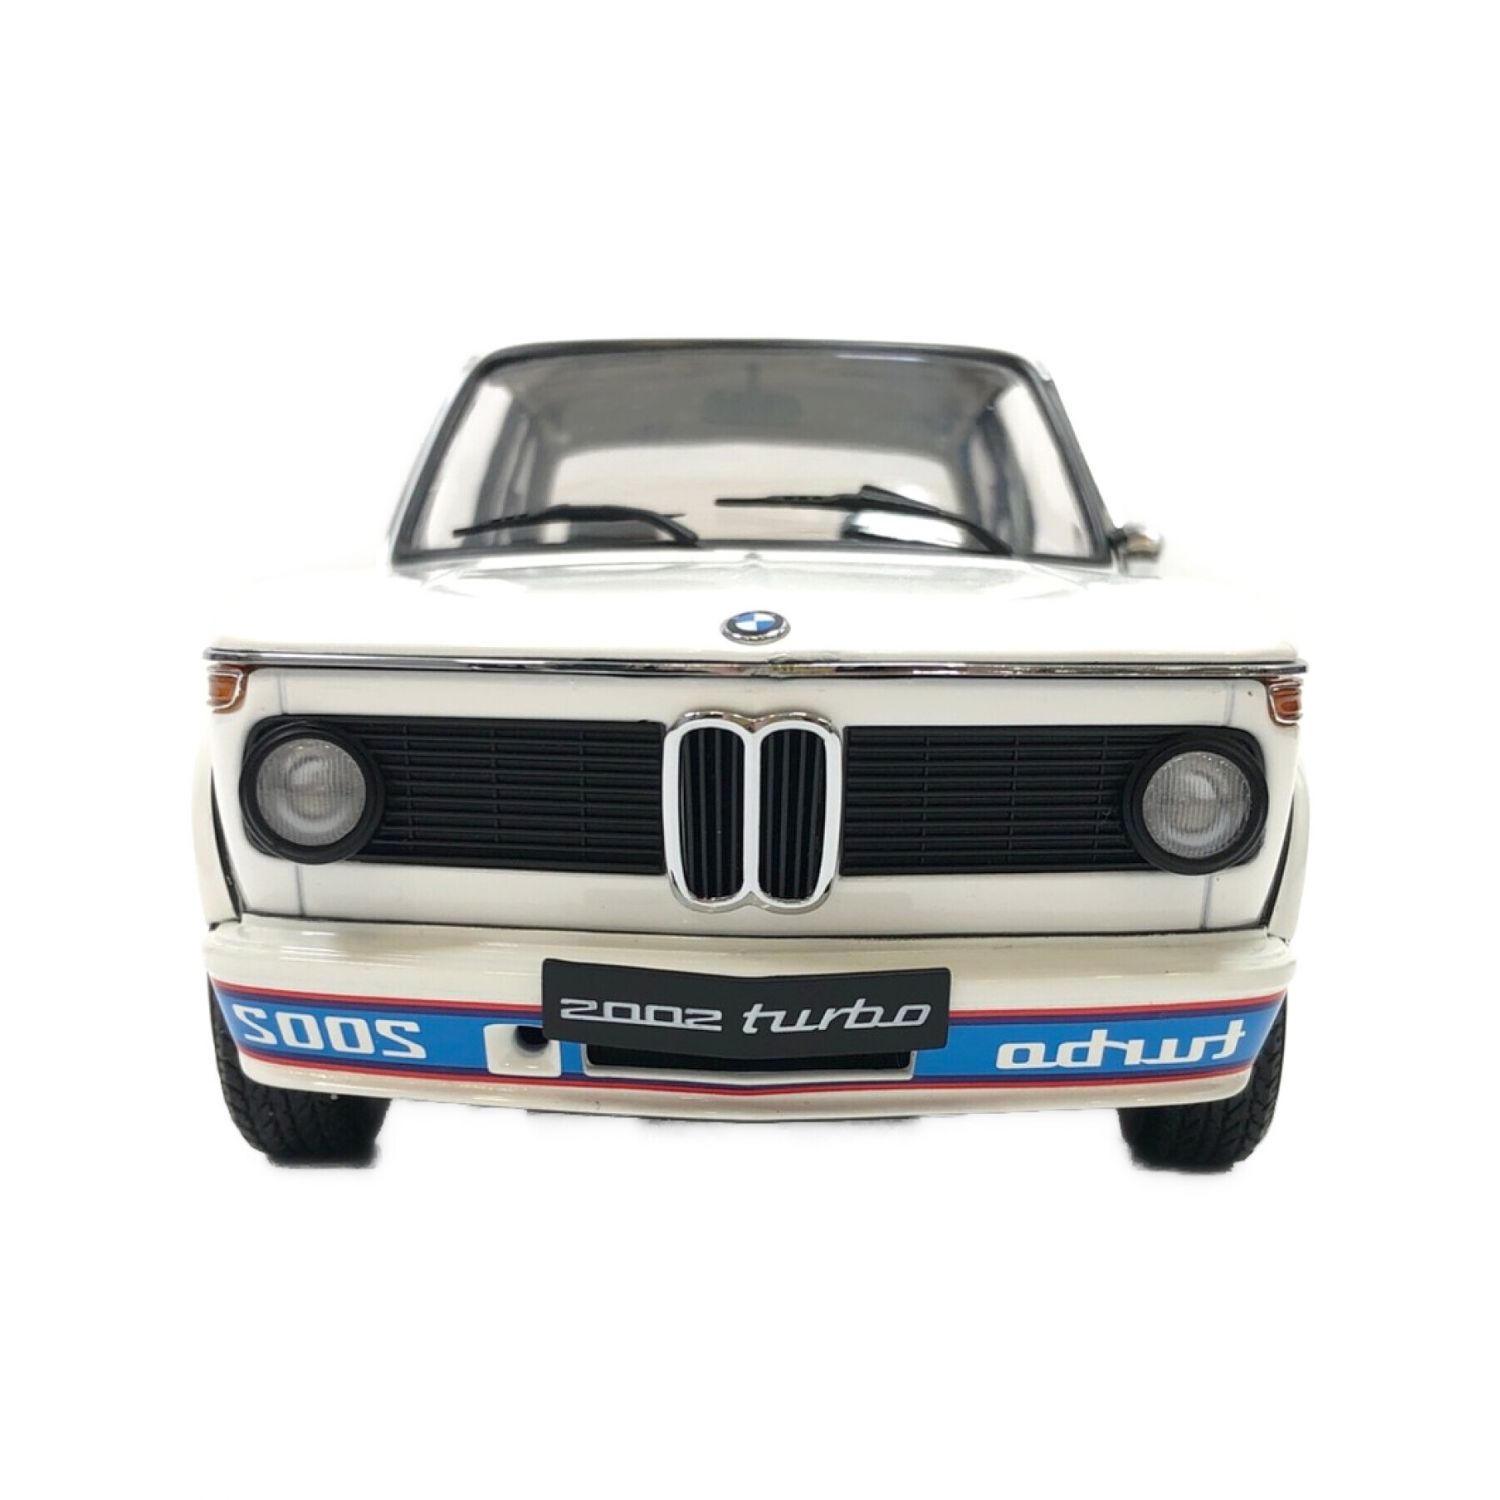 AUTOart (オートアート) ミニカー 1/18 BMW 2002 turbo 1973(ホワイト 